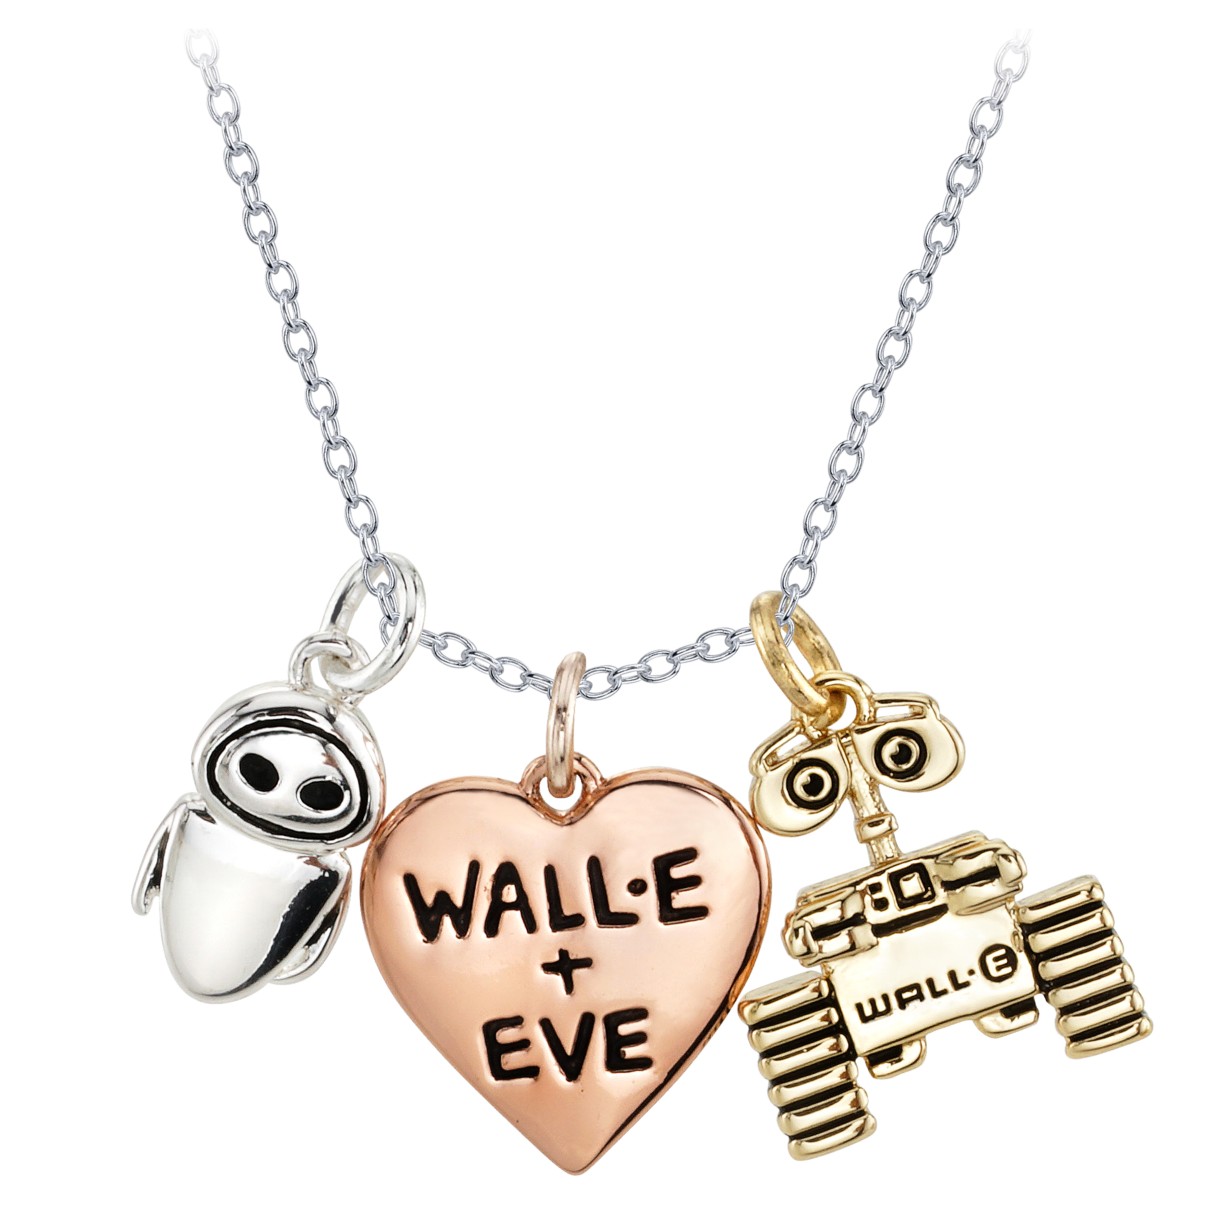 WALL•E and E.V.E. Heart Necklace